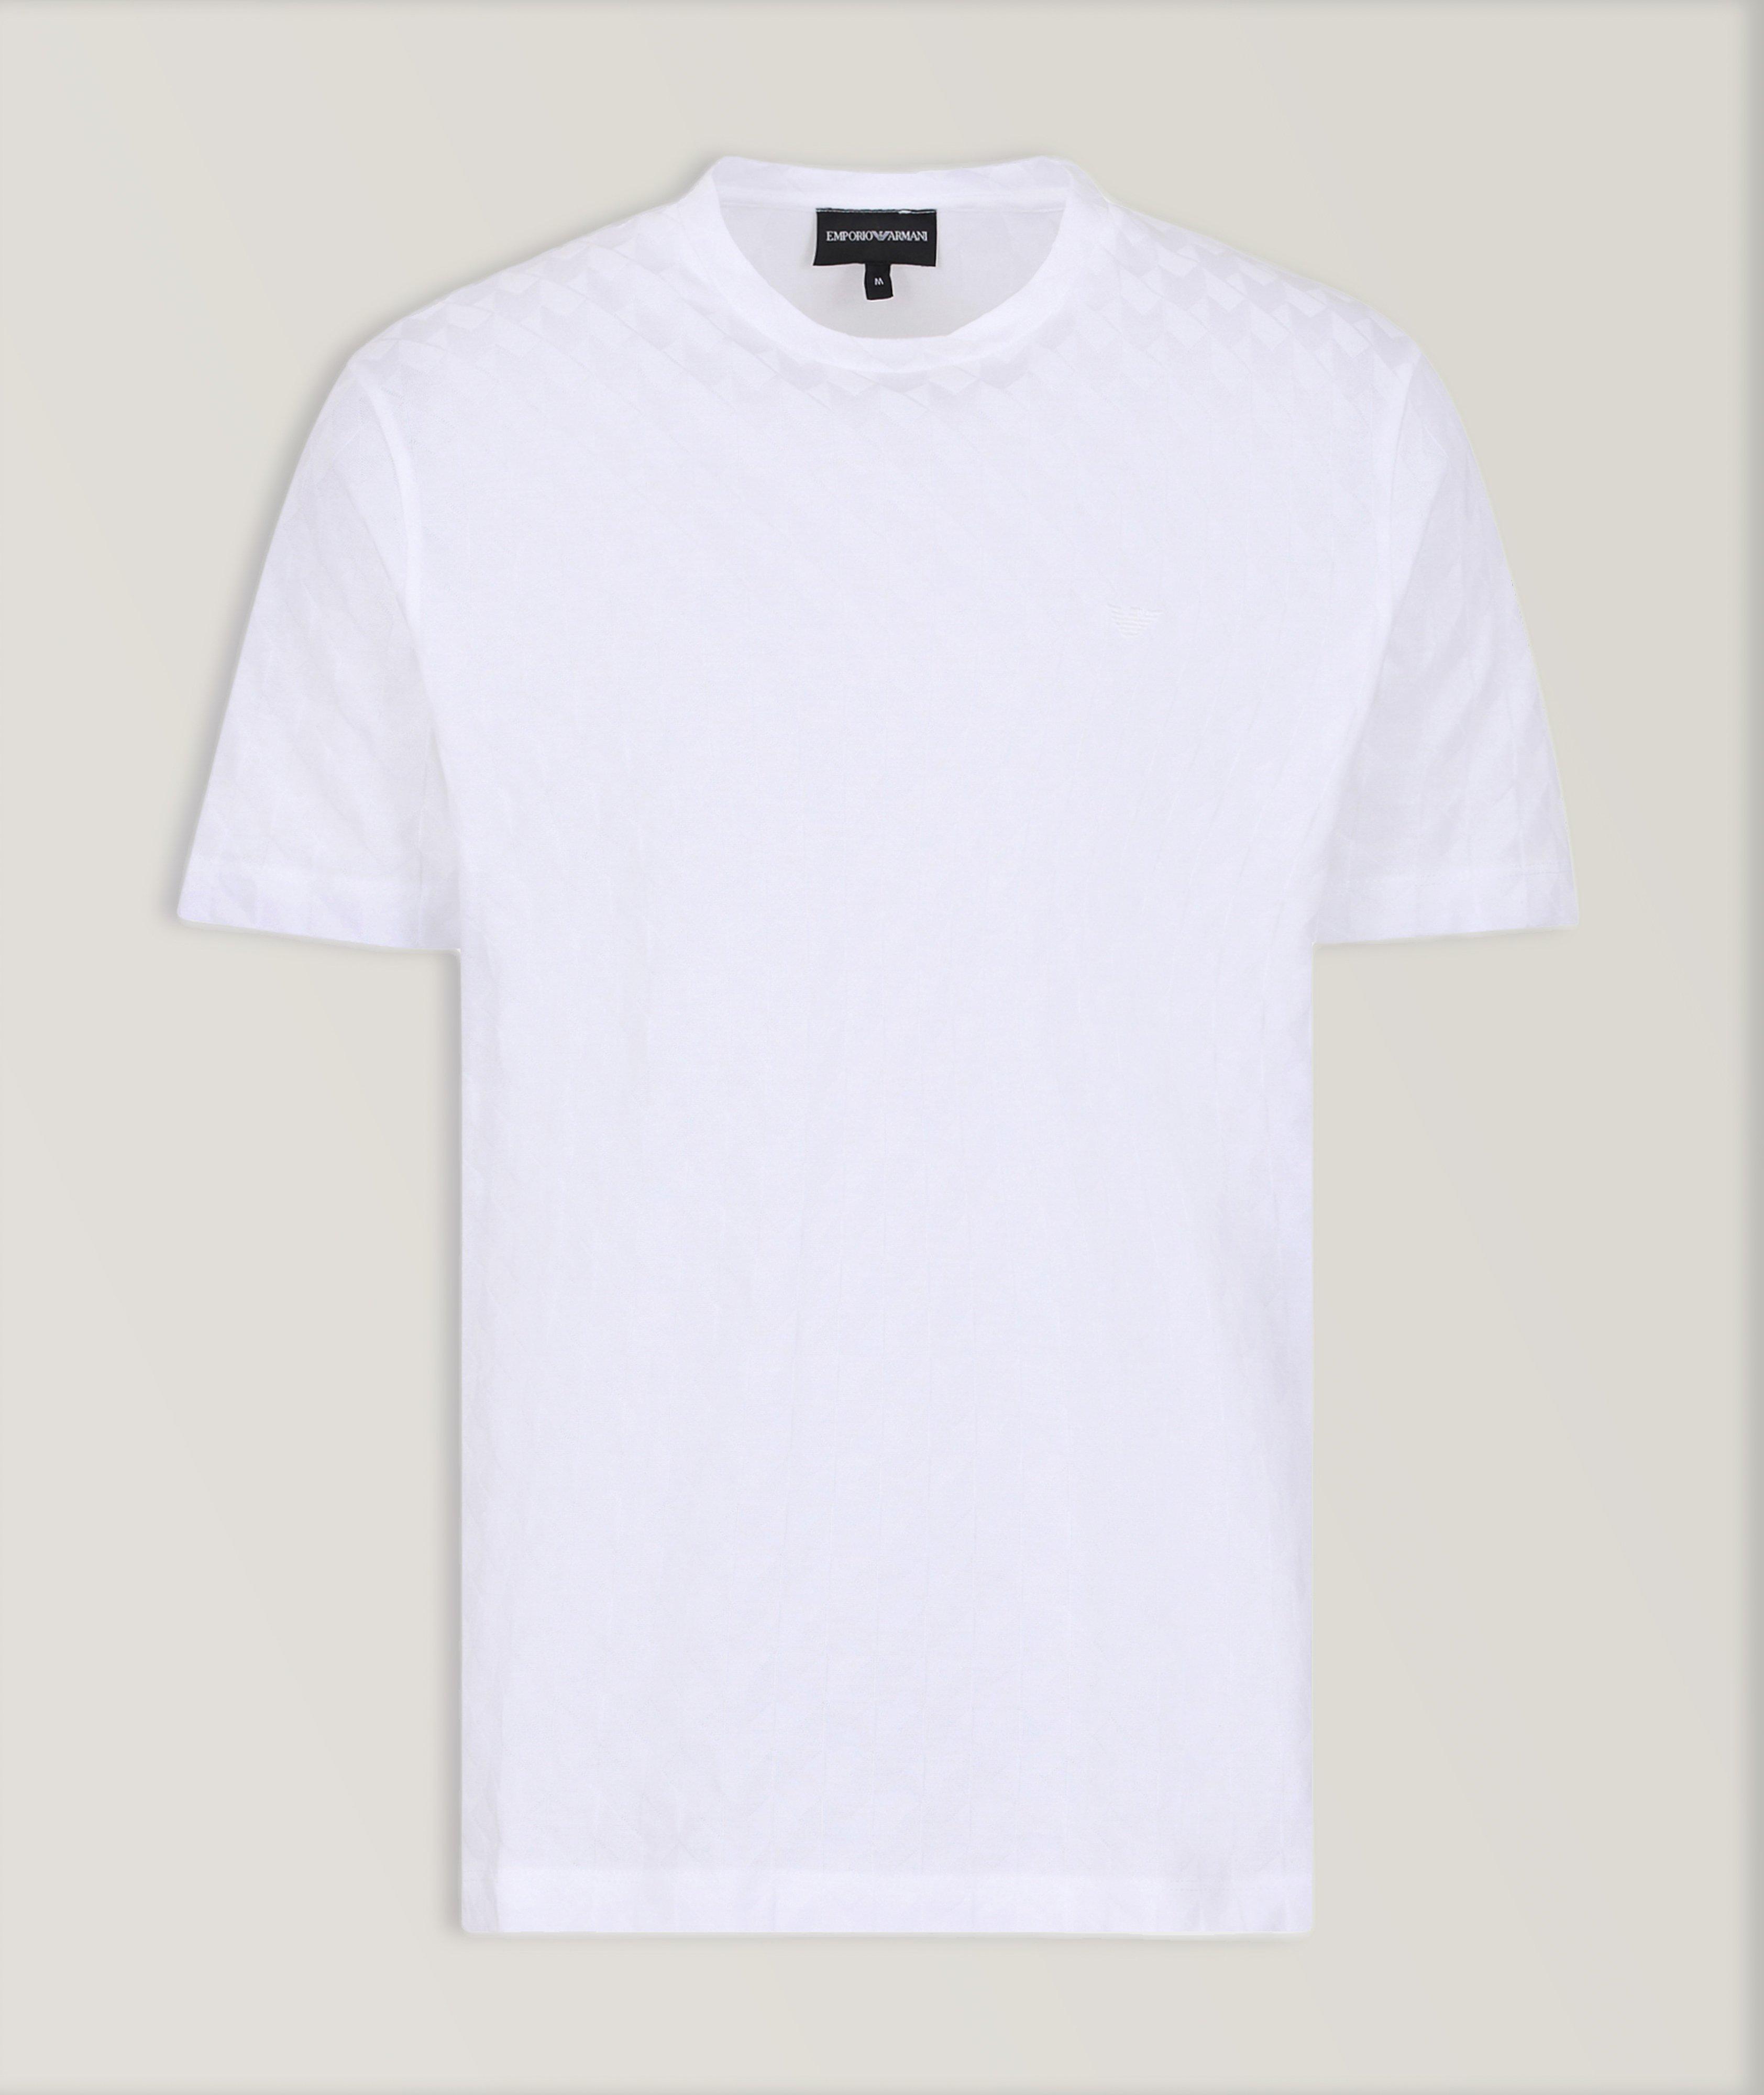 Jacquard Jersey Cotton T-Shirt image 0